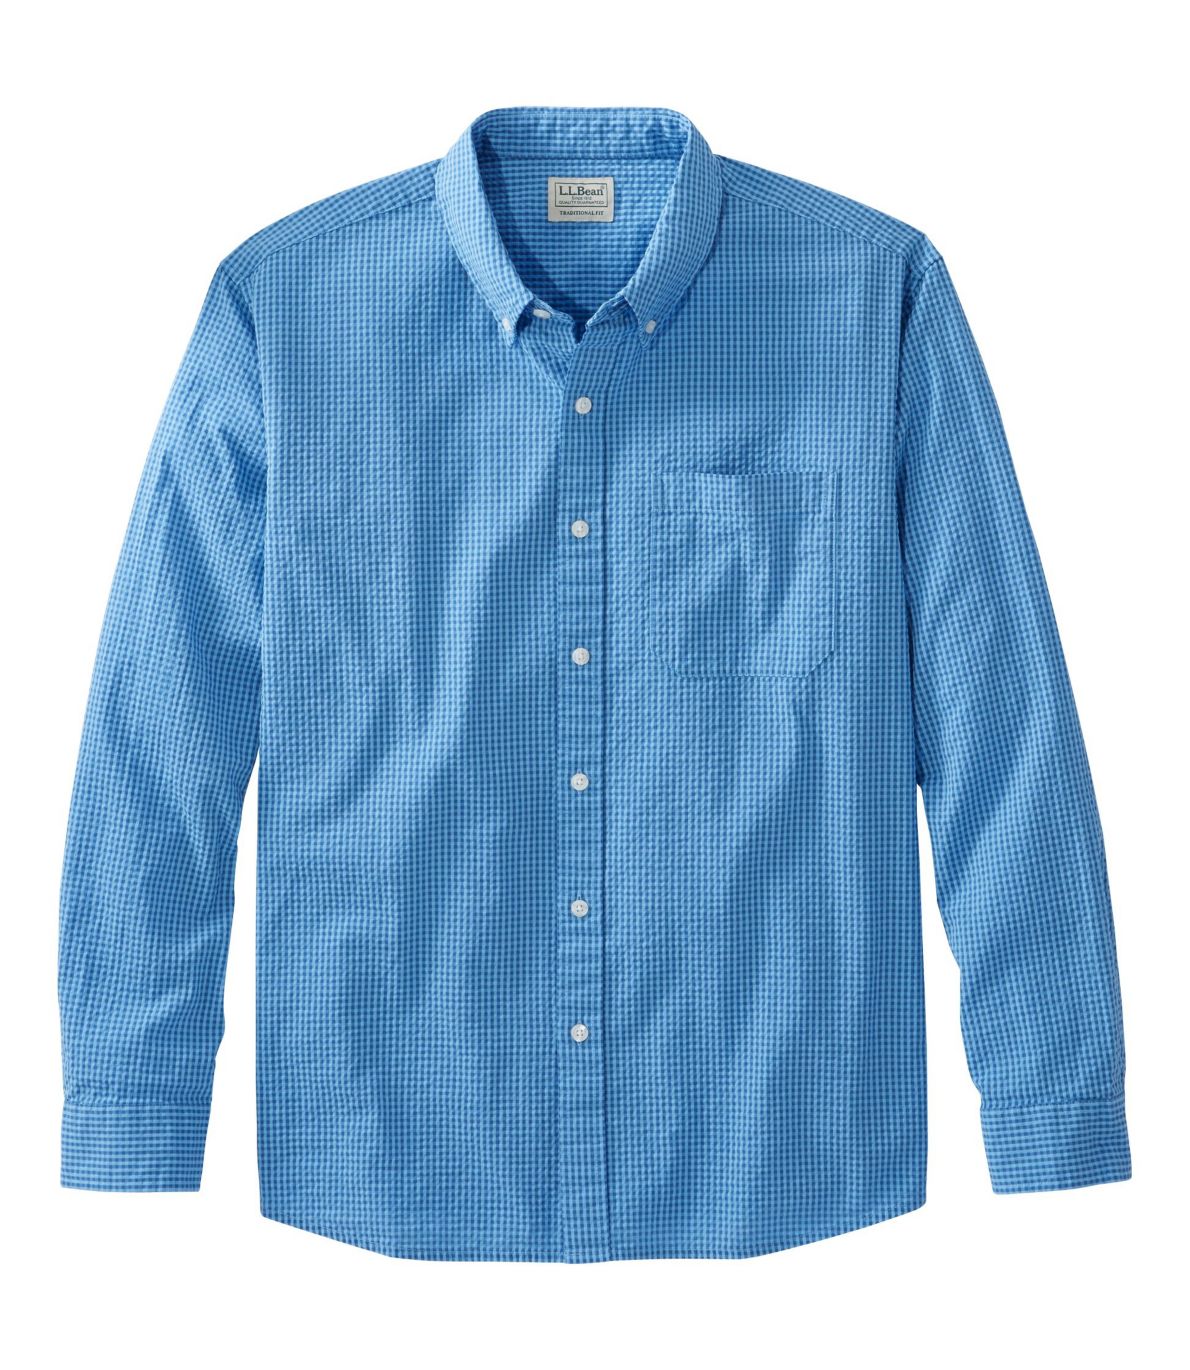 Men's Organic Cotton Seersucker Shirt, Long-Sleeve, Traditional Fit, Plaid